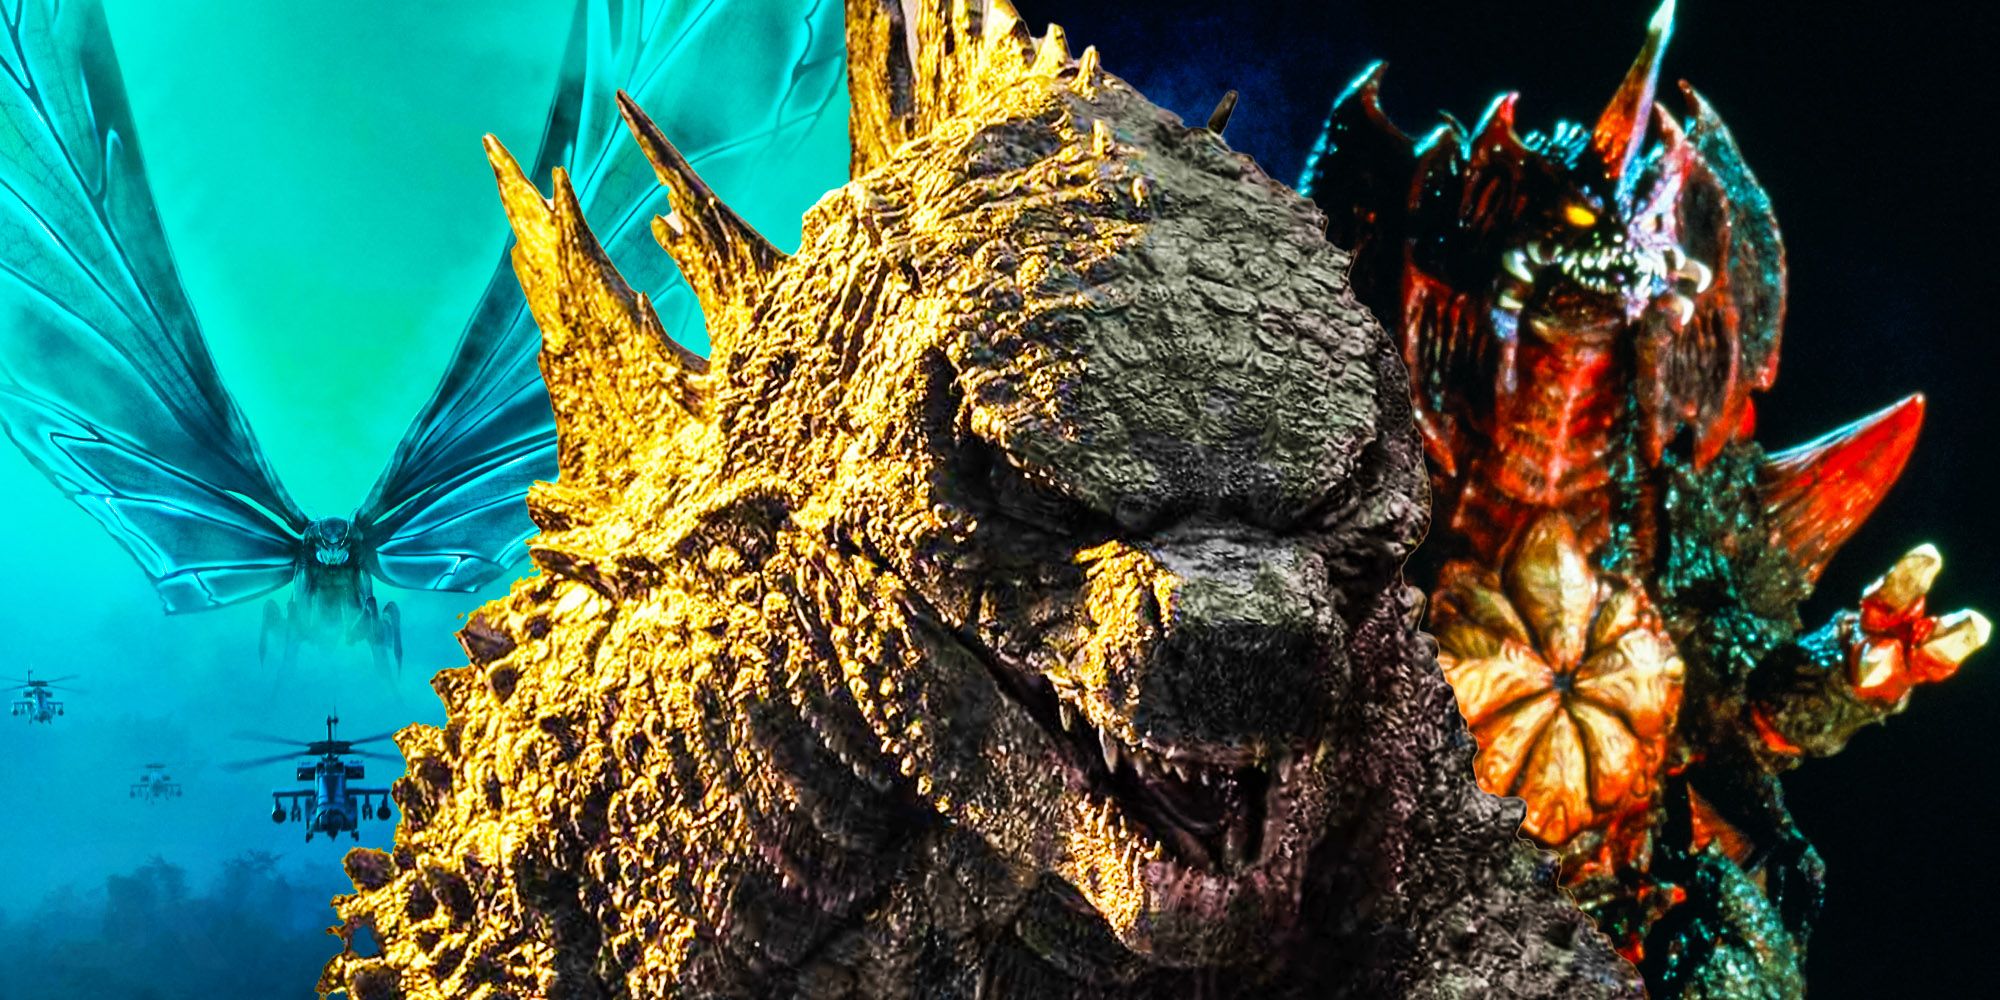 Godzilla: Every Missing KOTM Titan That Can Secretly Be A Toho Monster